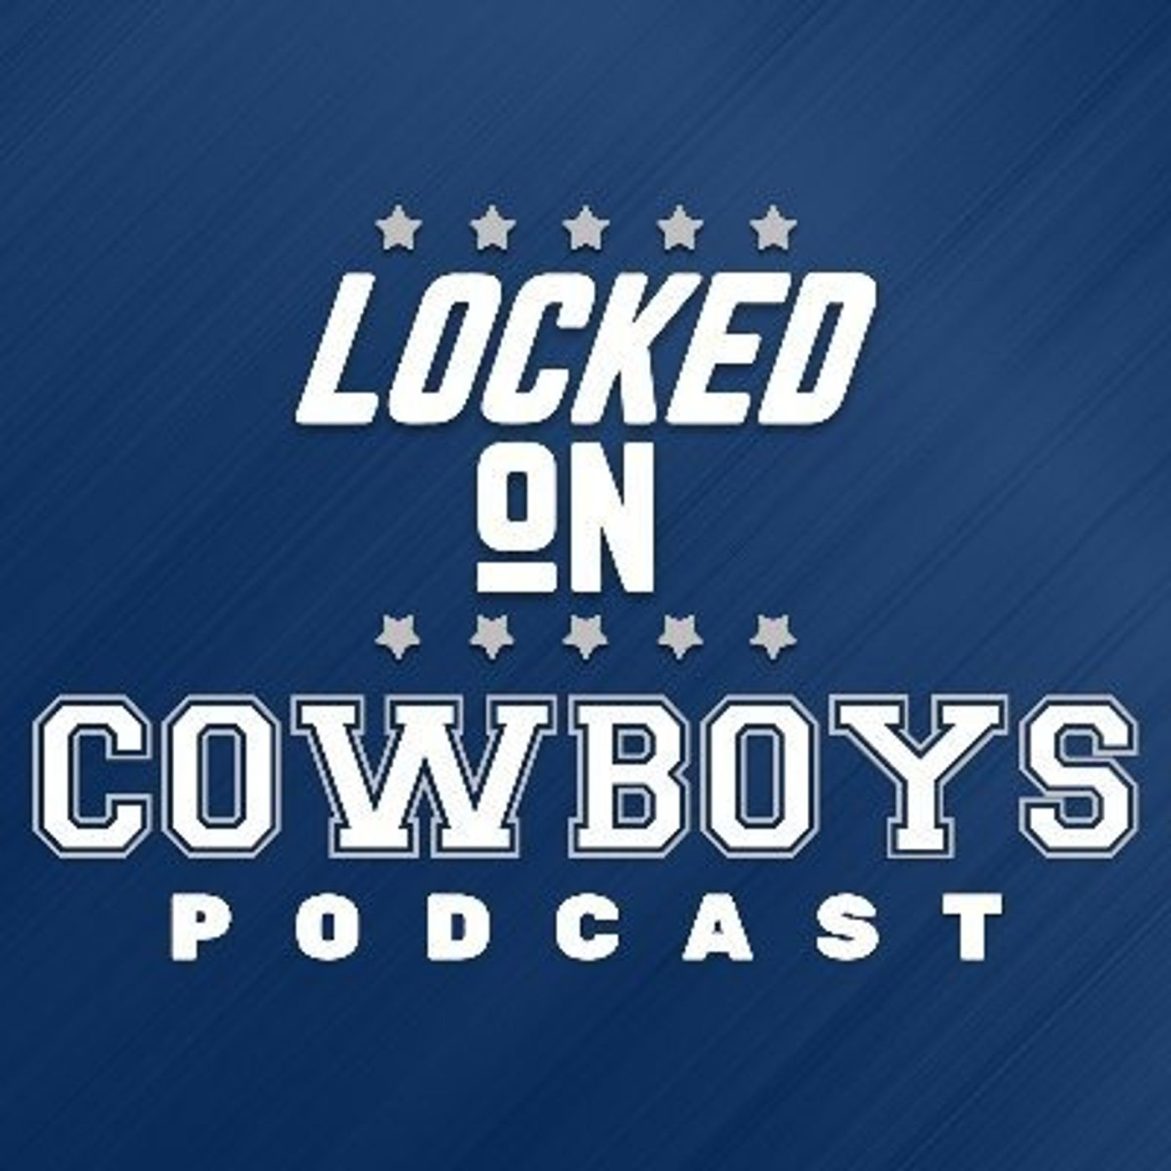 Black Podcasting - Best Running Back Option For Dallas Cowboys?